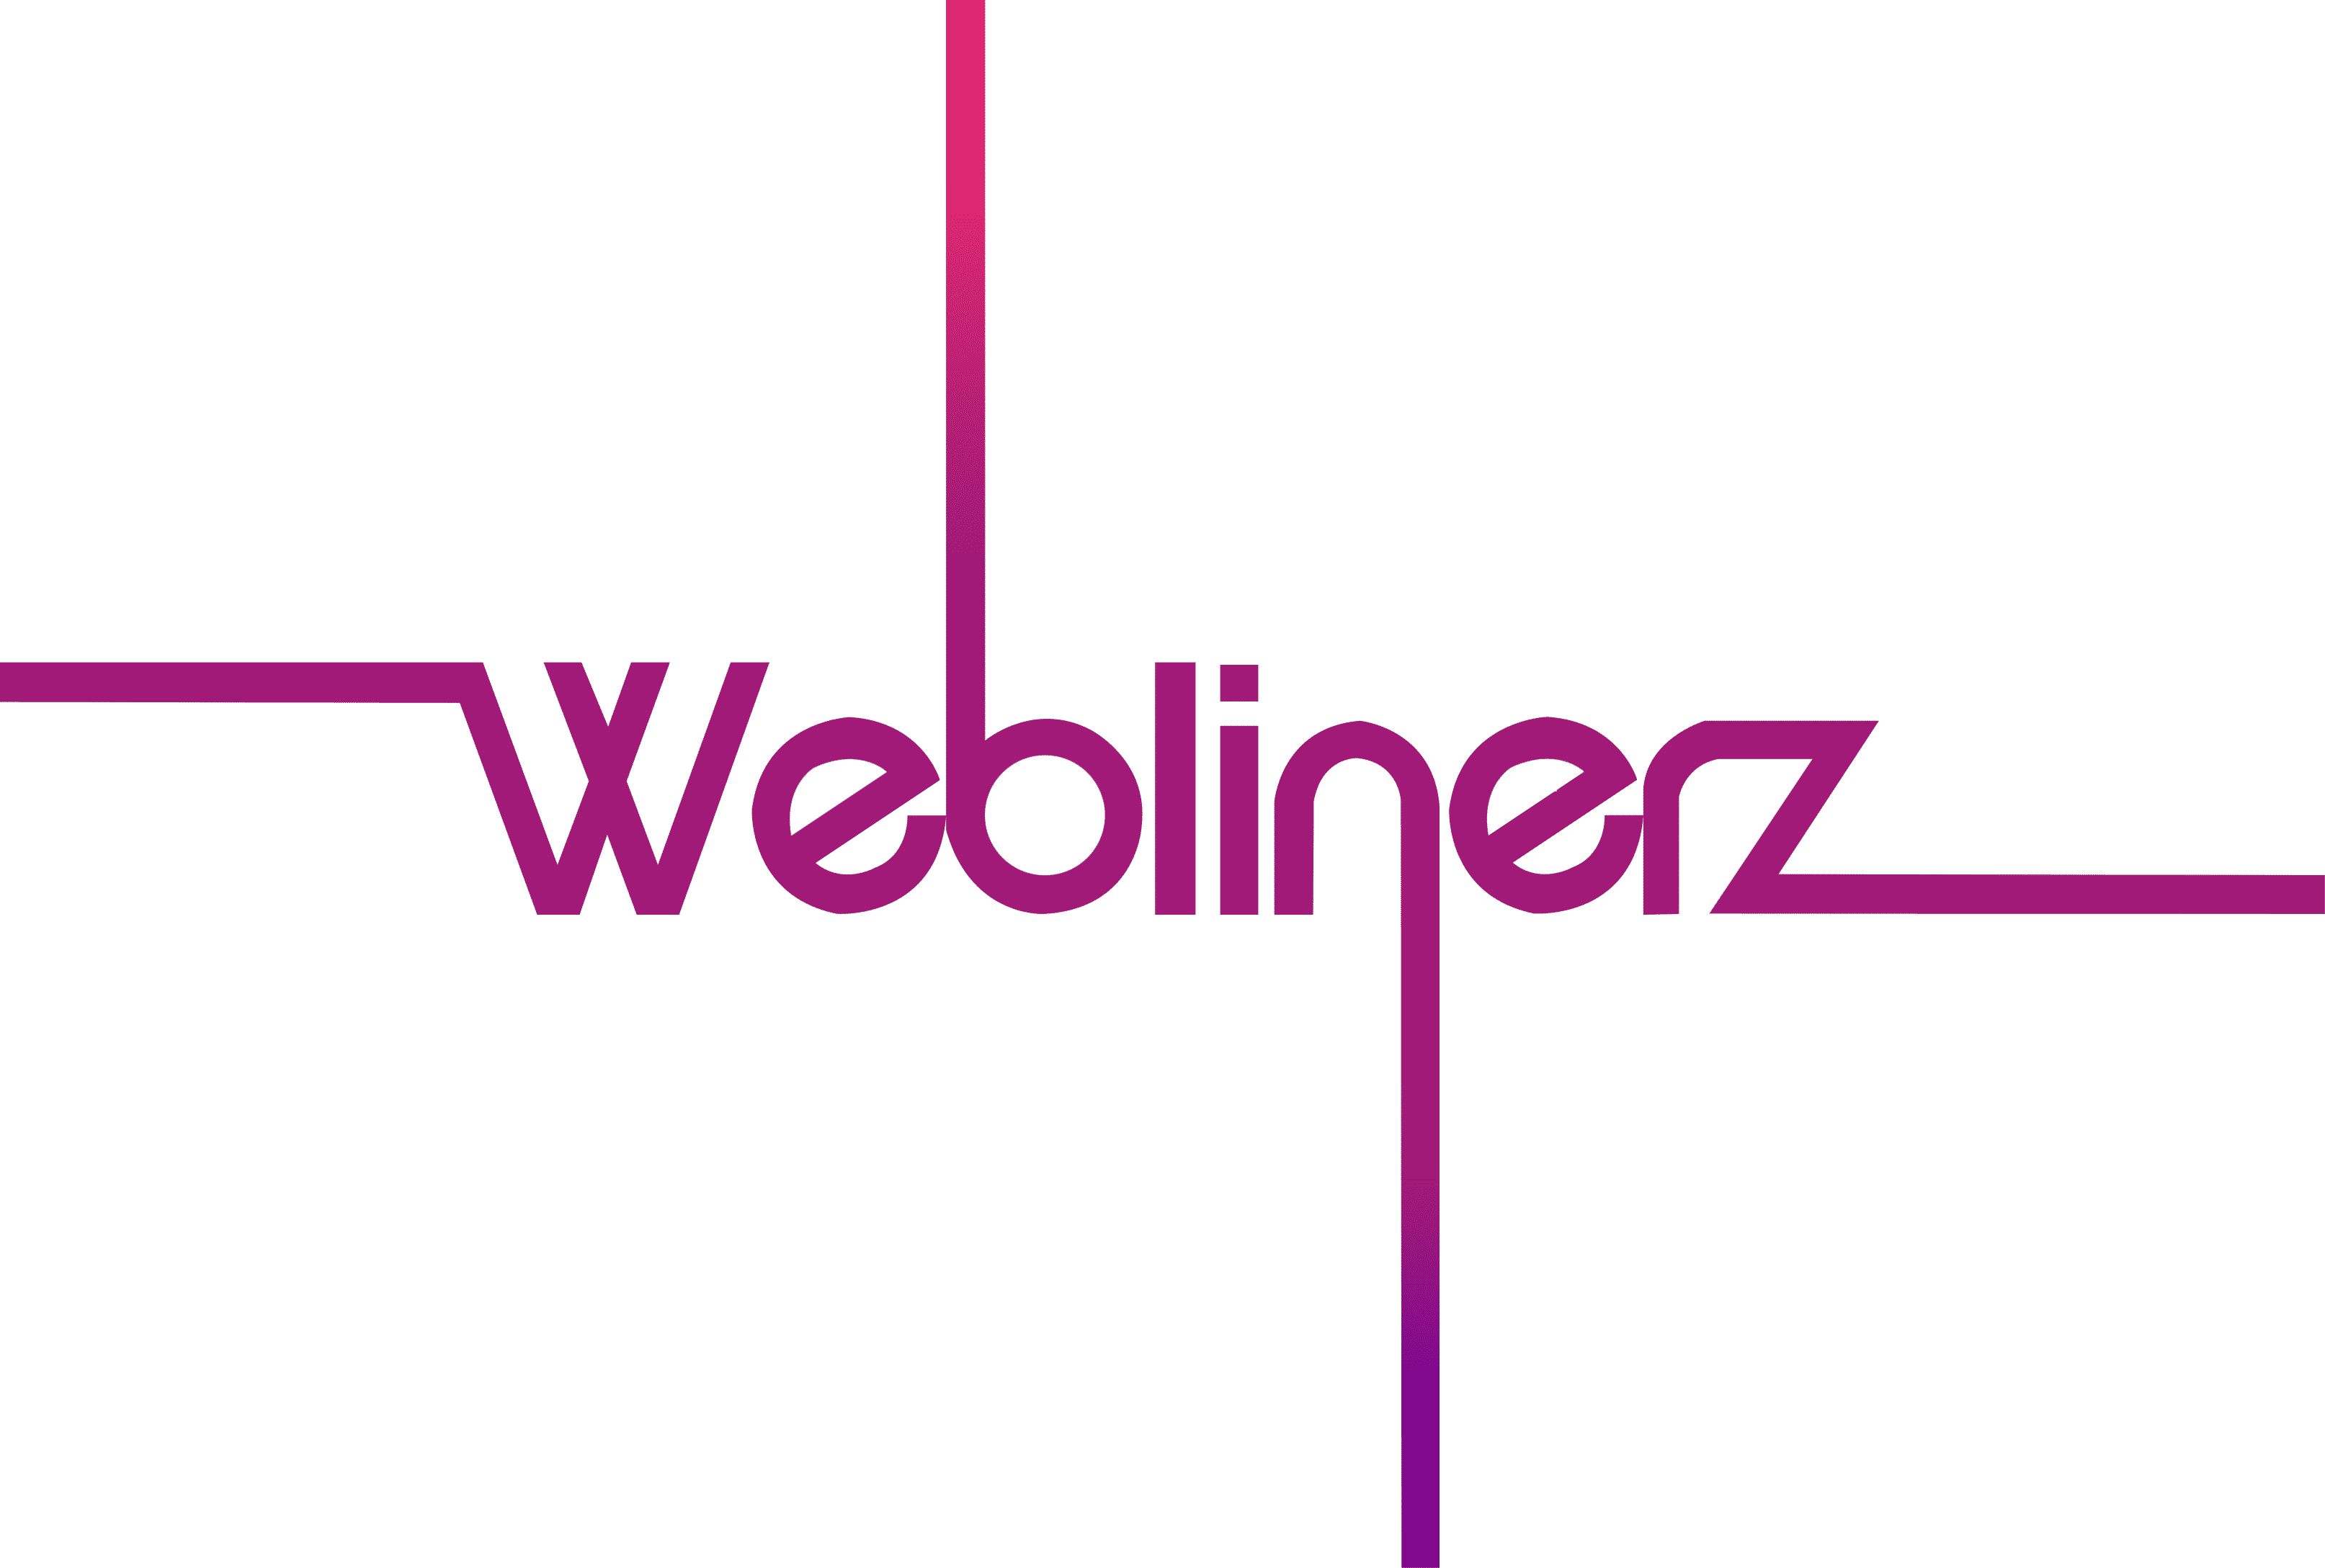 Weblinerz Ltd